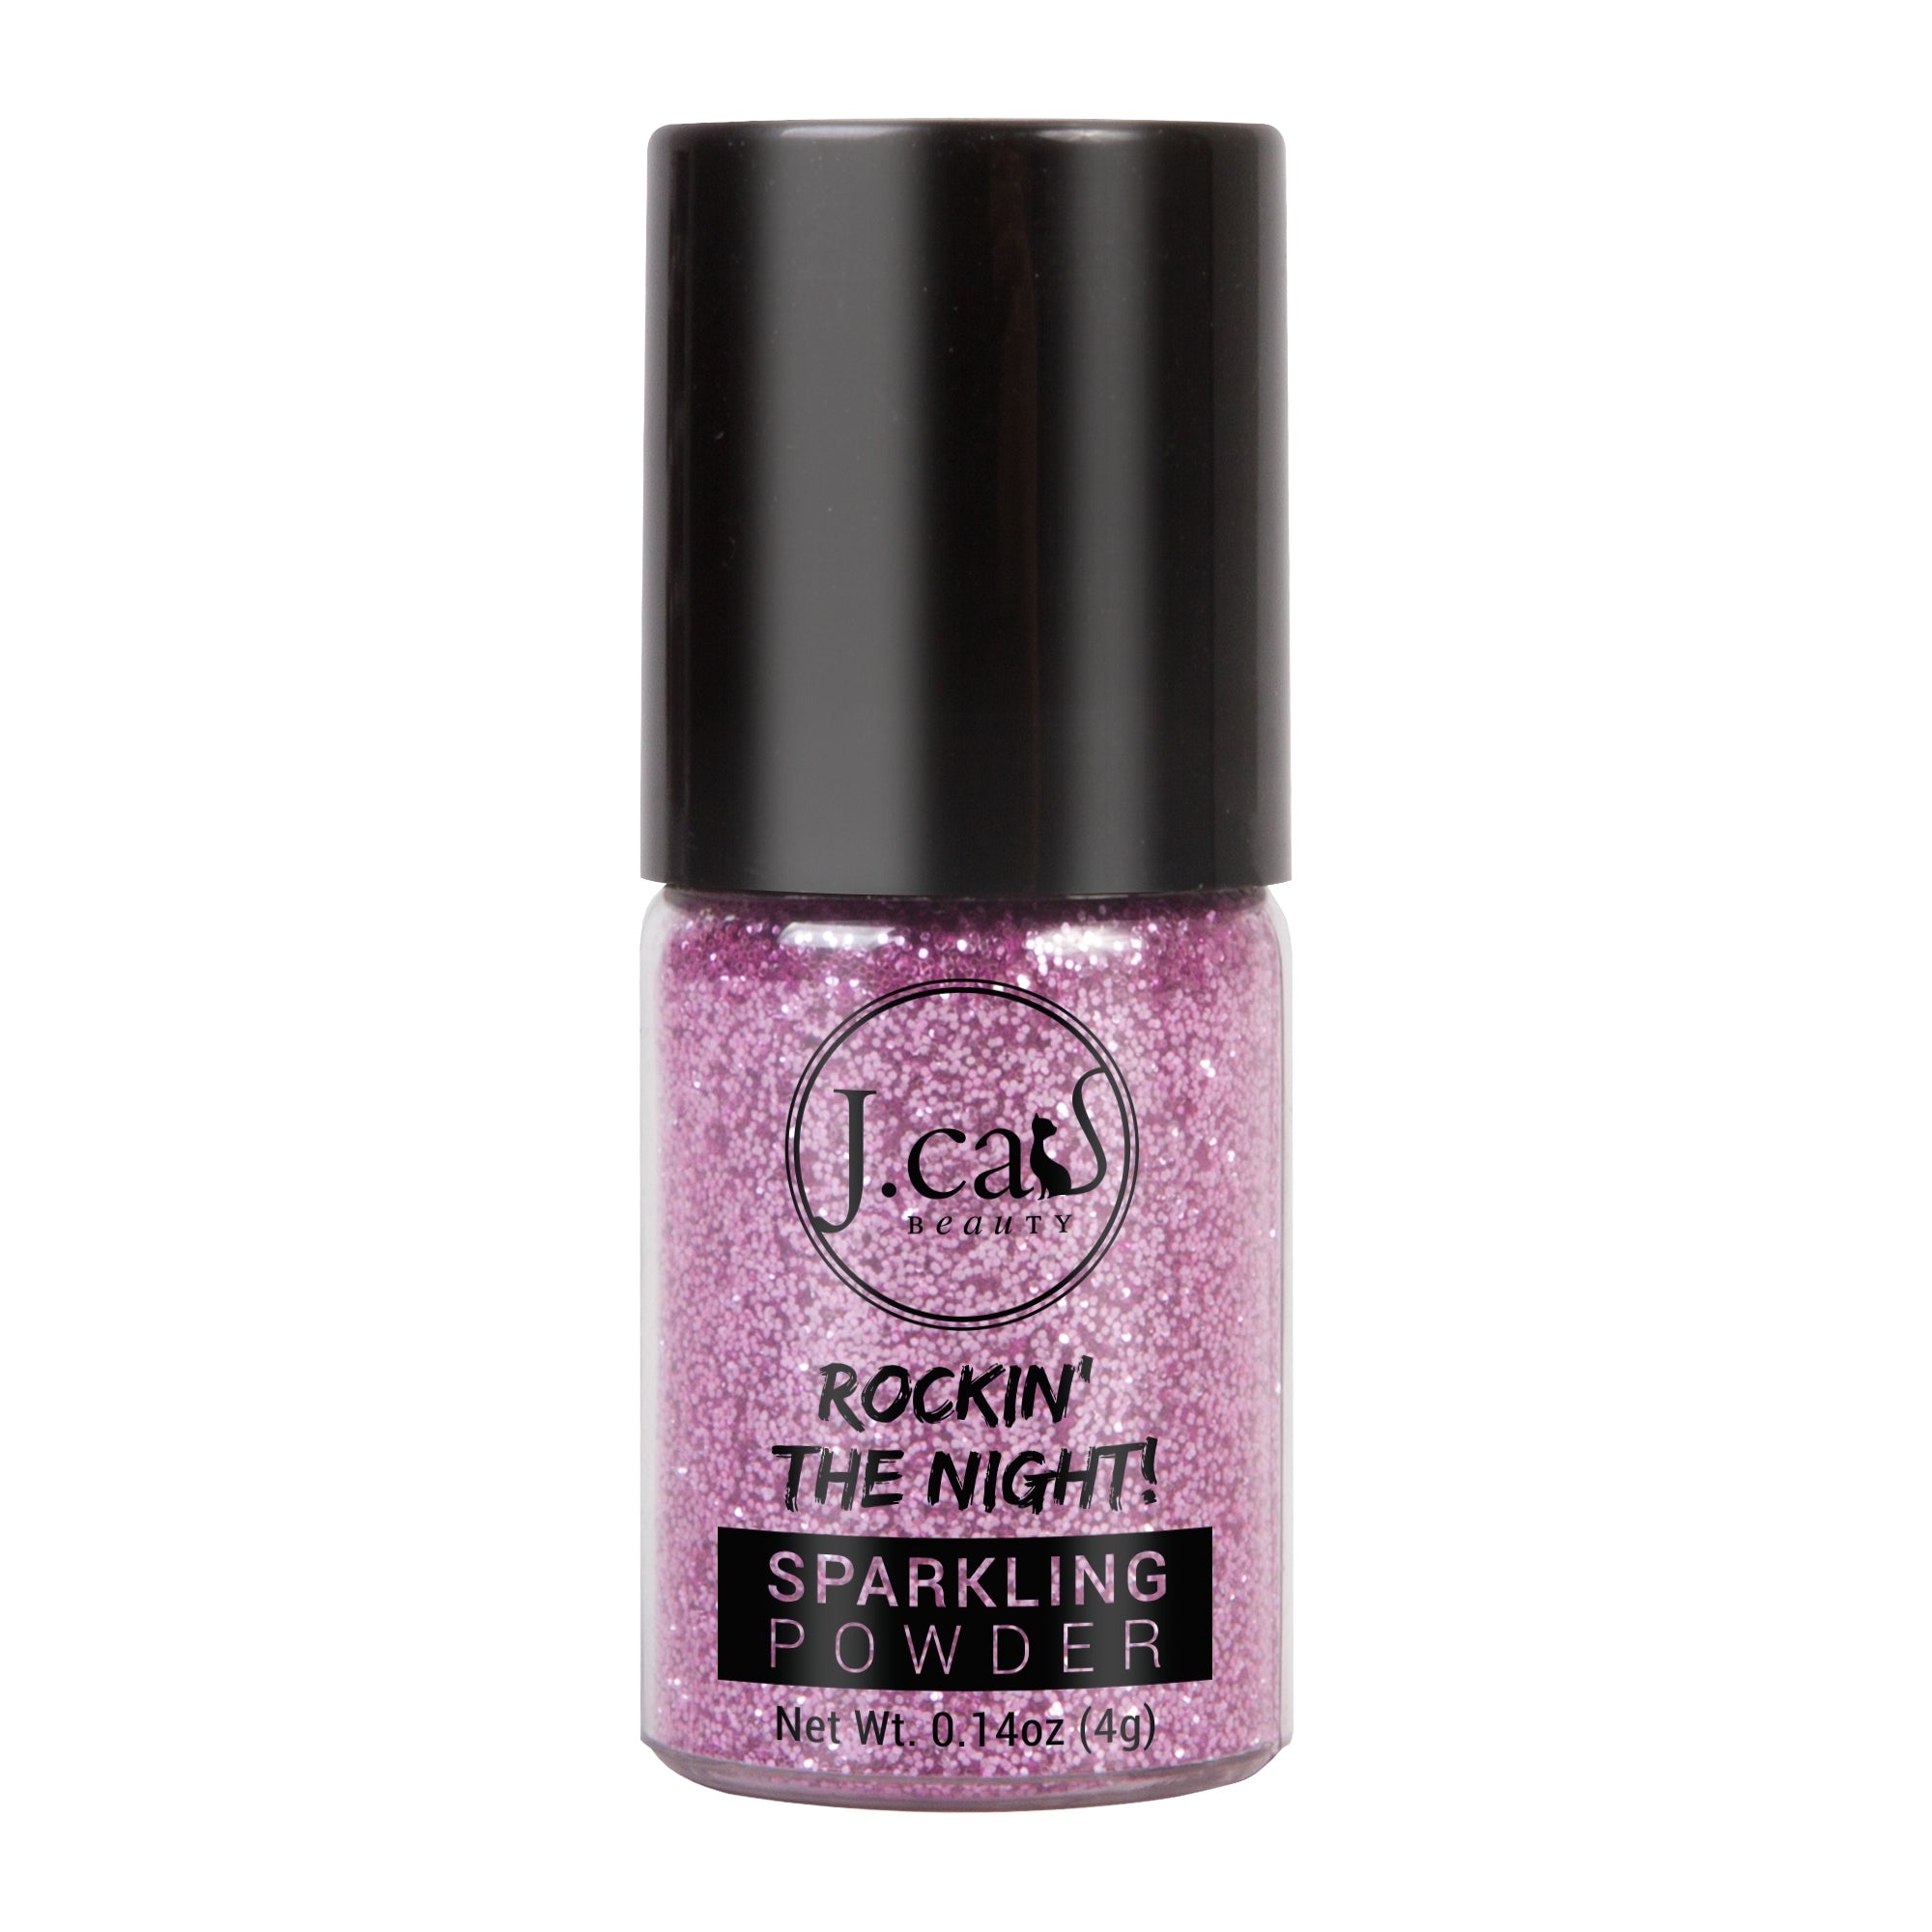 ROCKIN' THE NIGHT! SPARKLING POWDER - LA7 ONLINE Pink Tutu